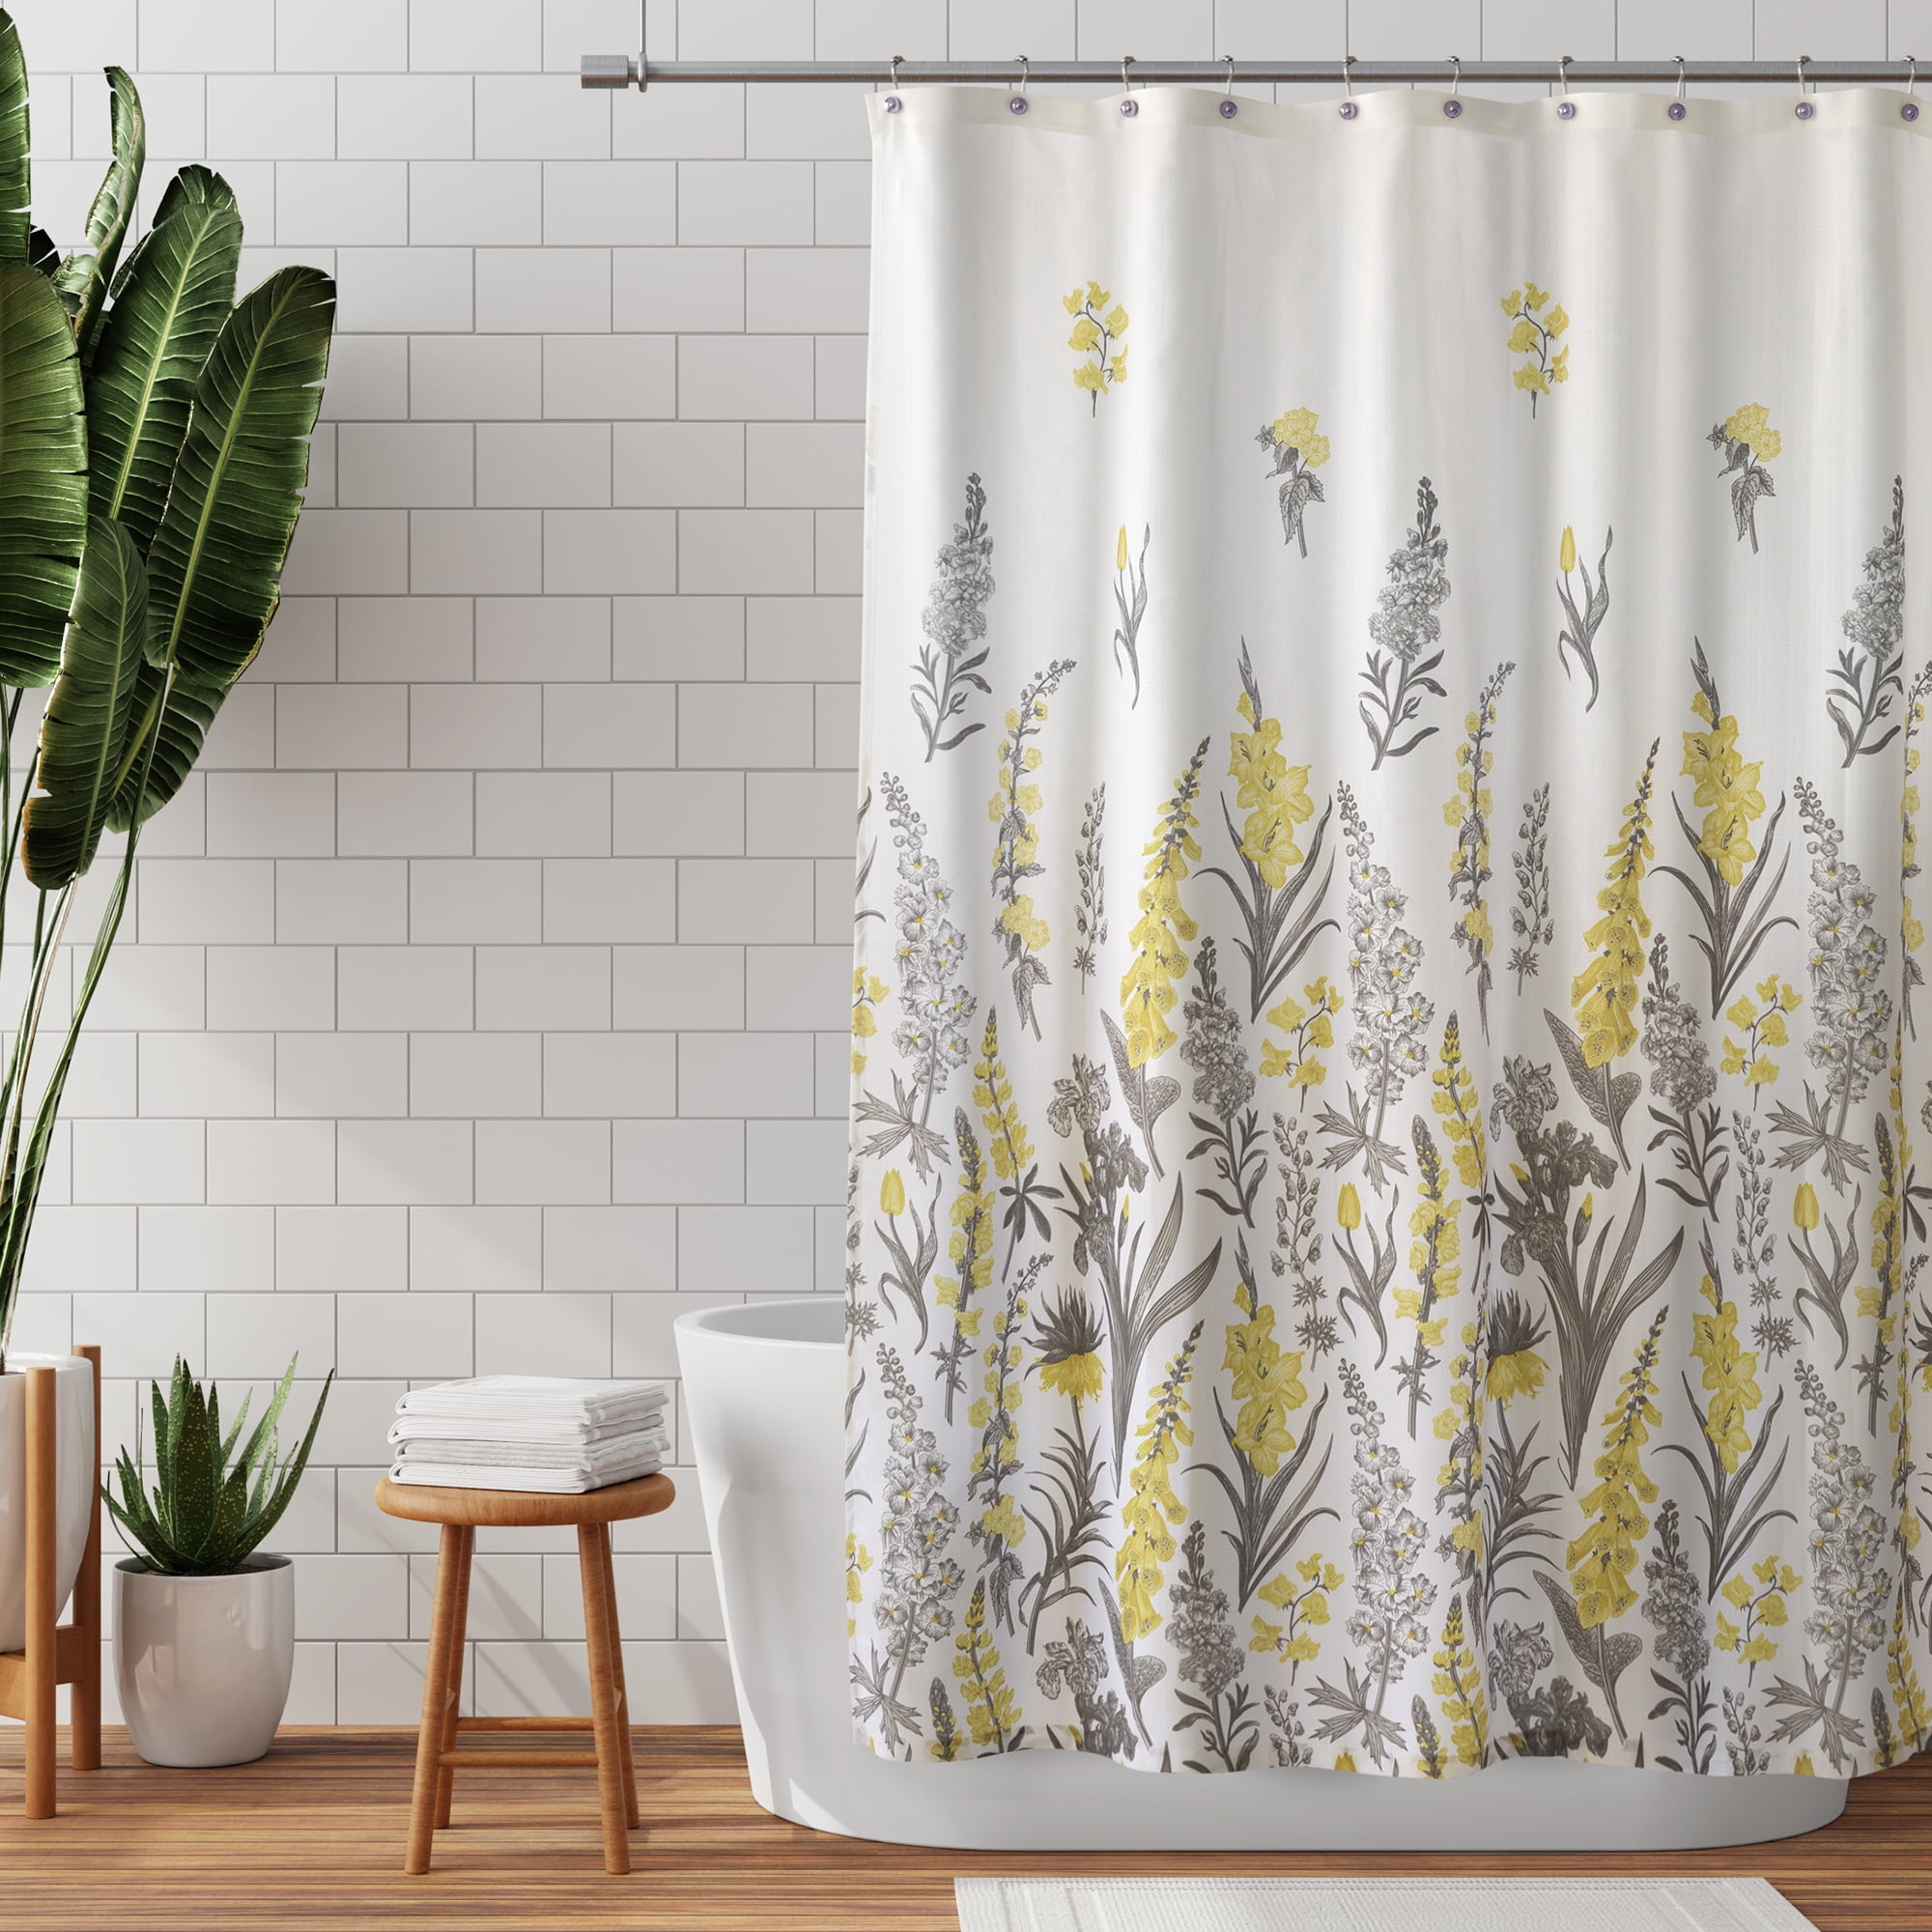 Fabric Shower Curtain Floral Damask Geometric Design 70" x 72" inch 